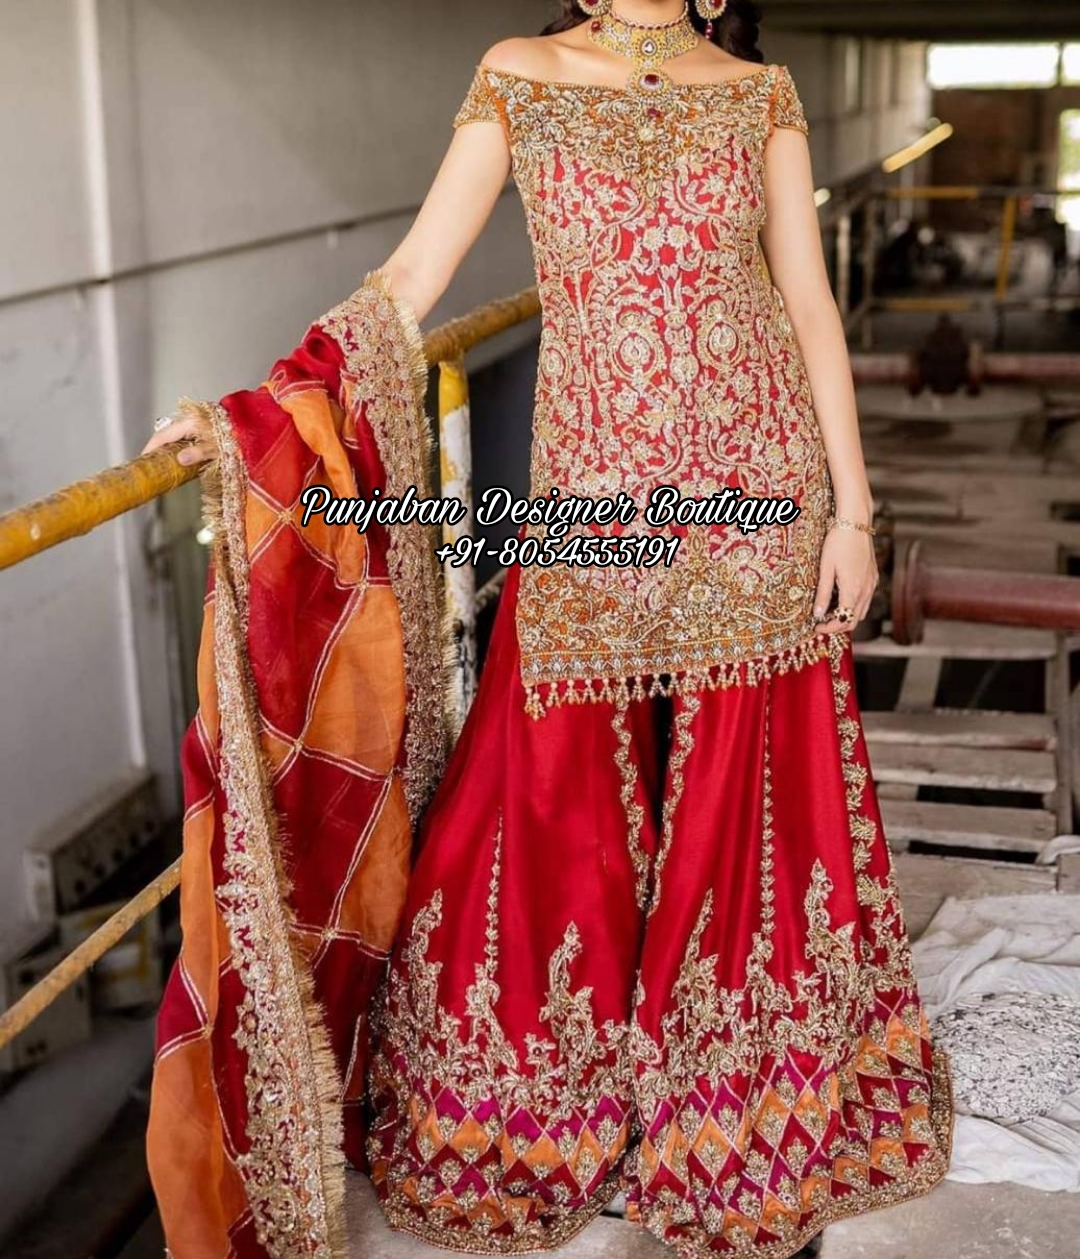 Punjabi Suits For Bridal Canada | Punjaban Designer Boutique